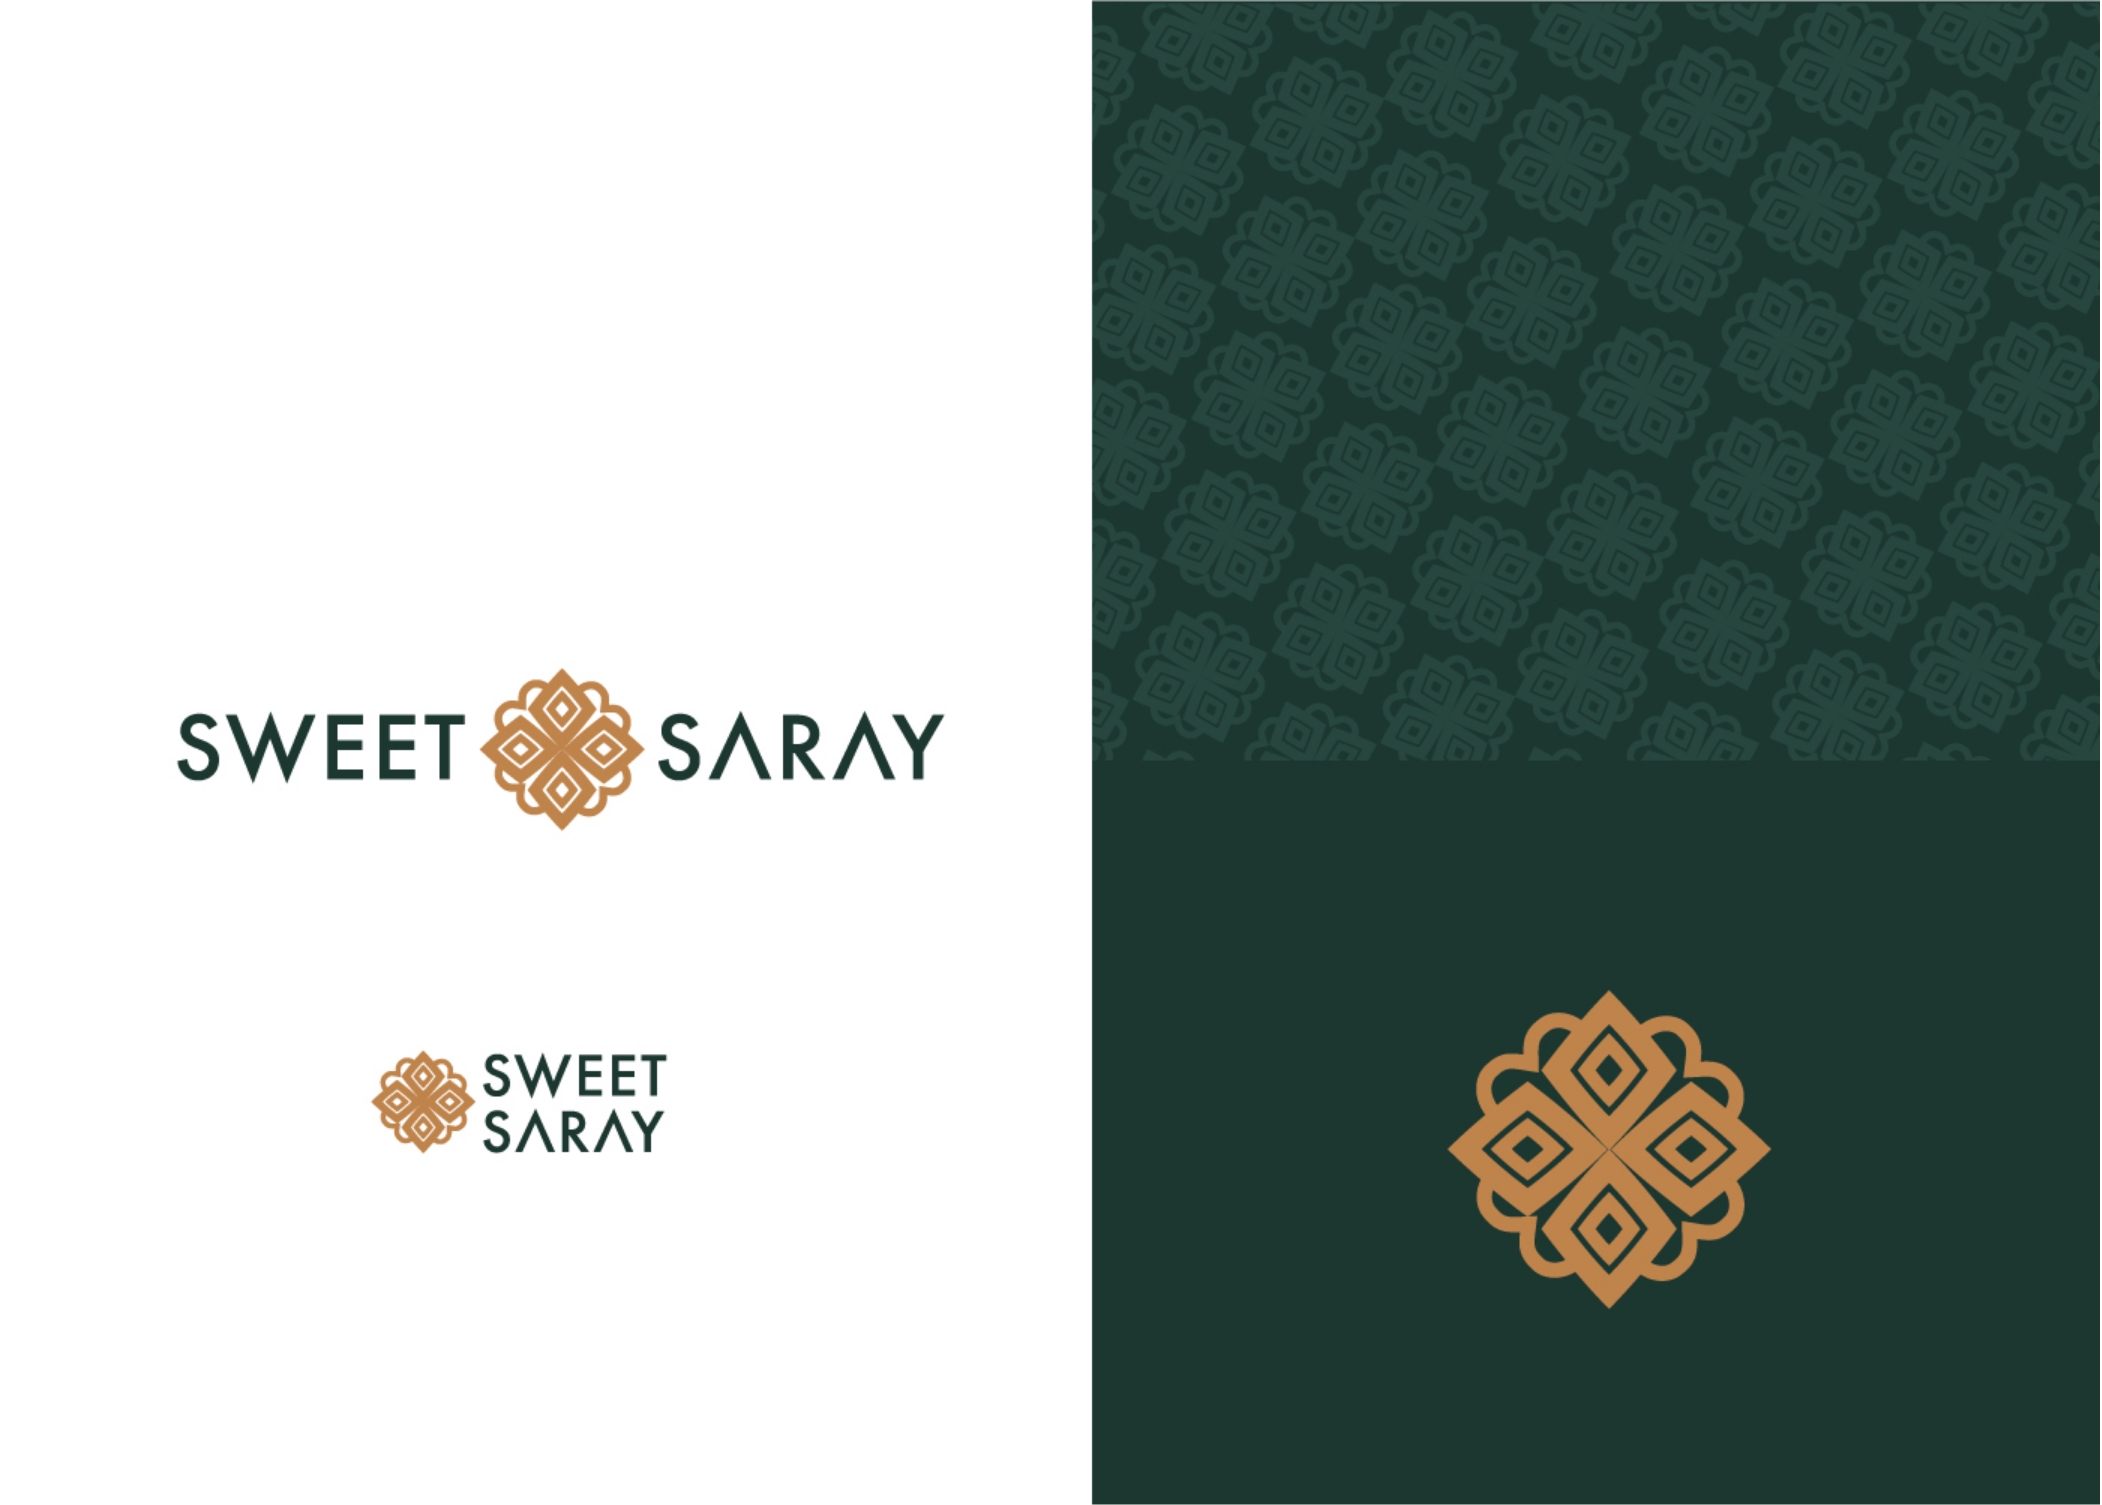 Designing a logo for Sweet Sarray